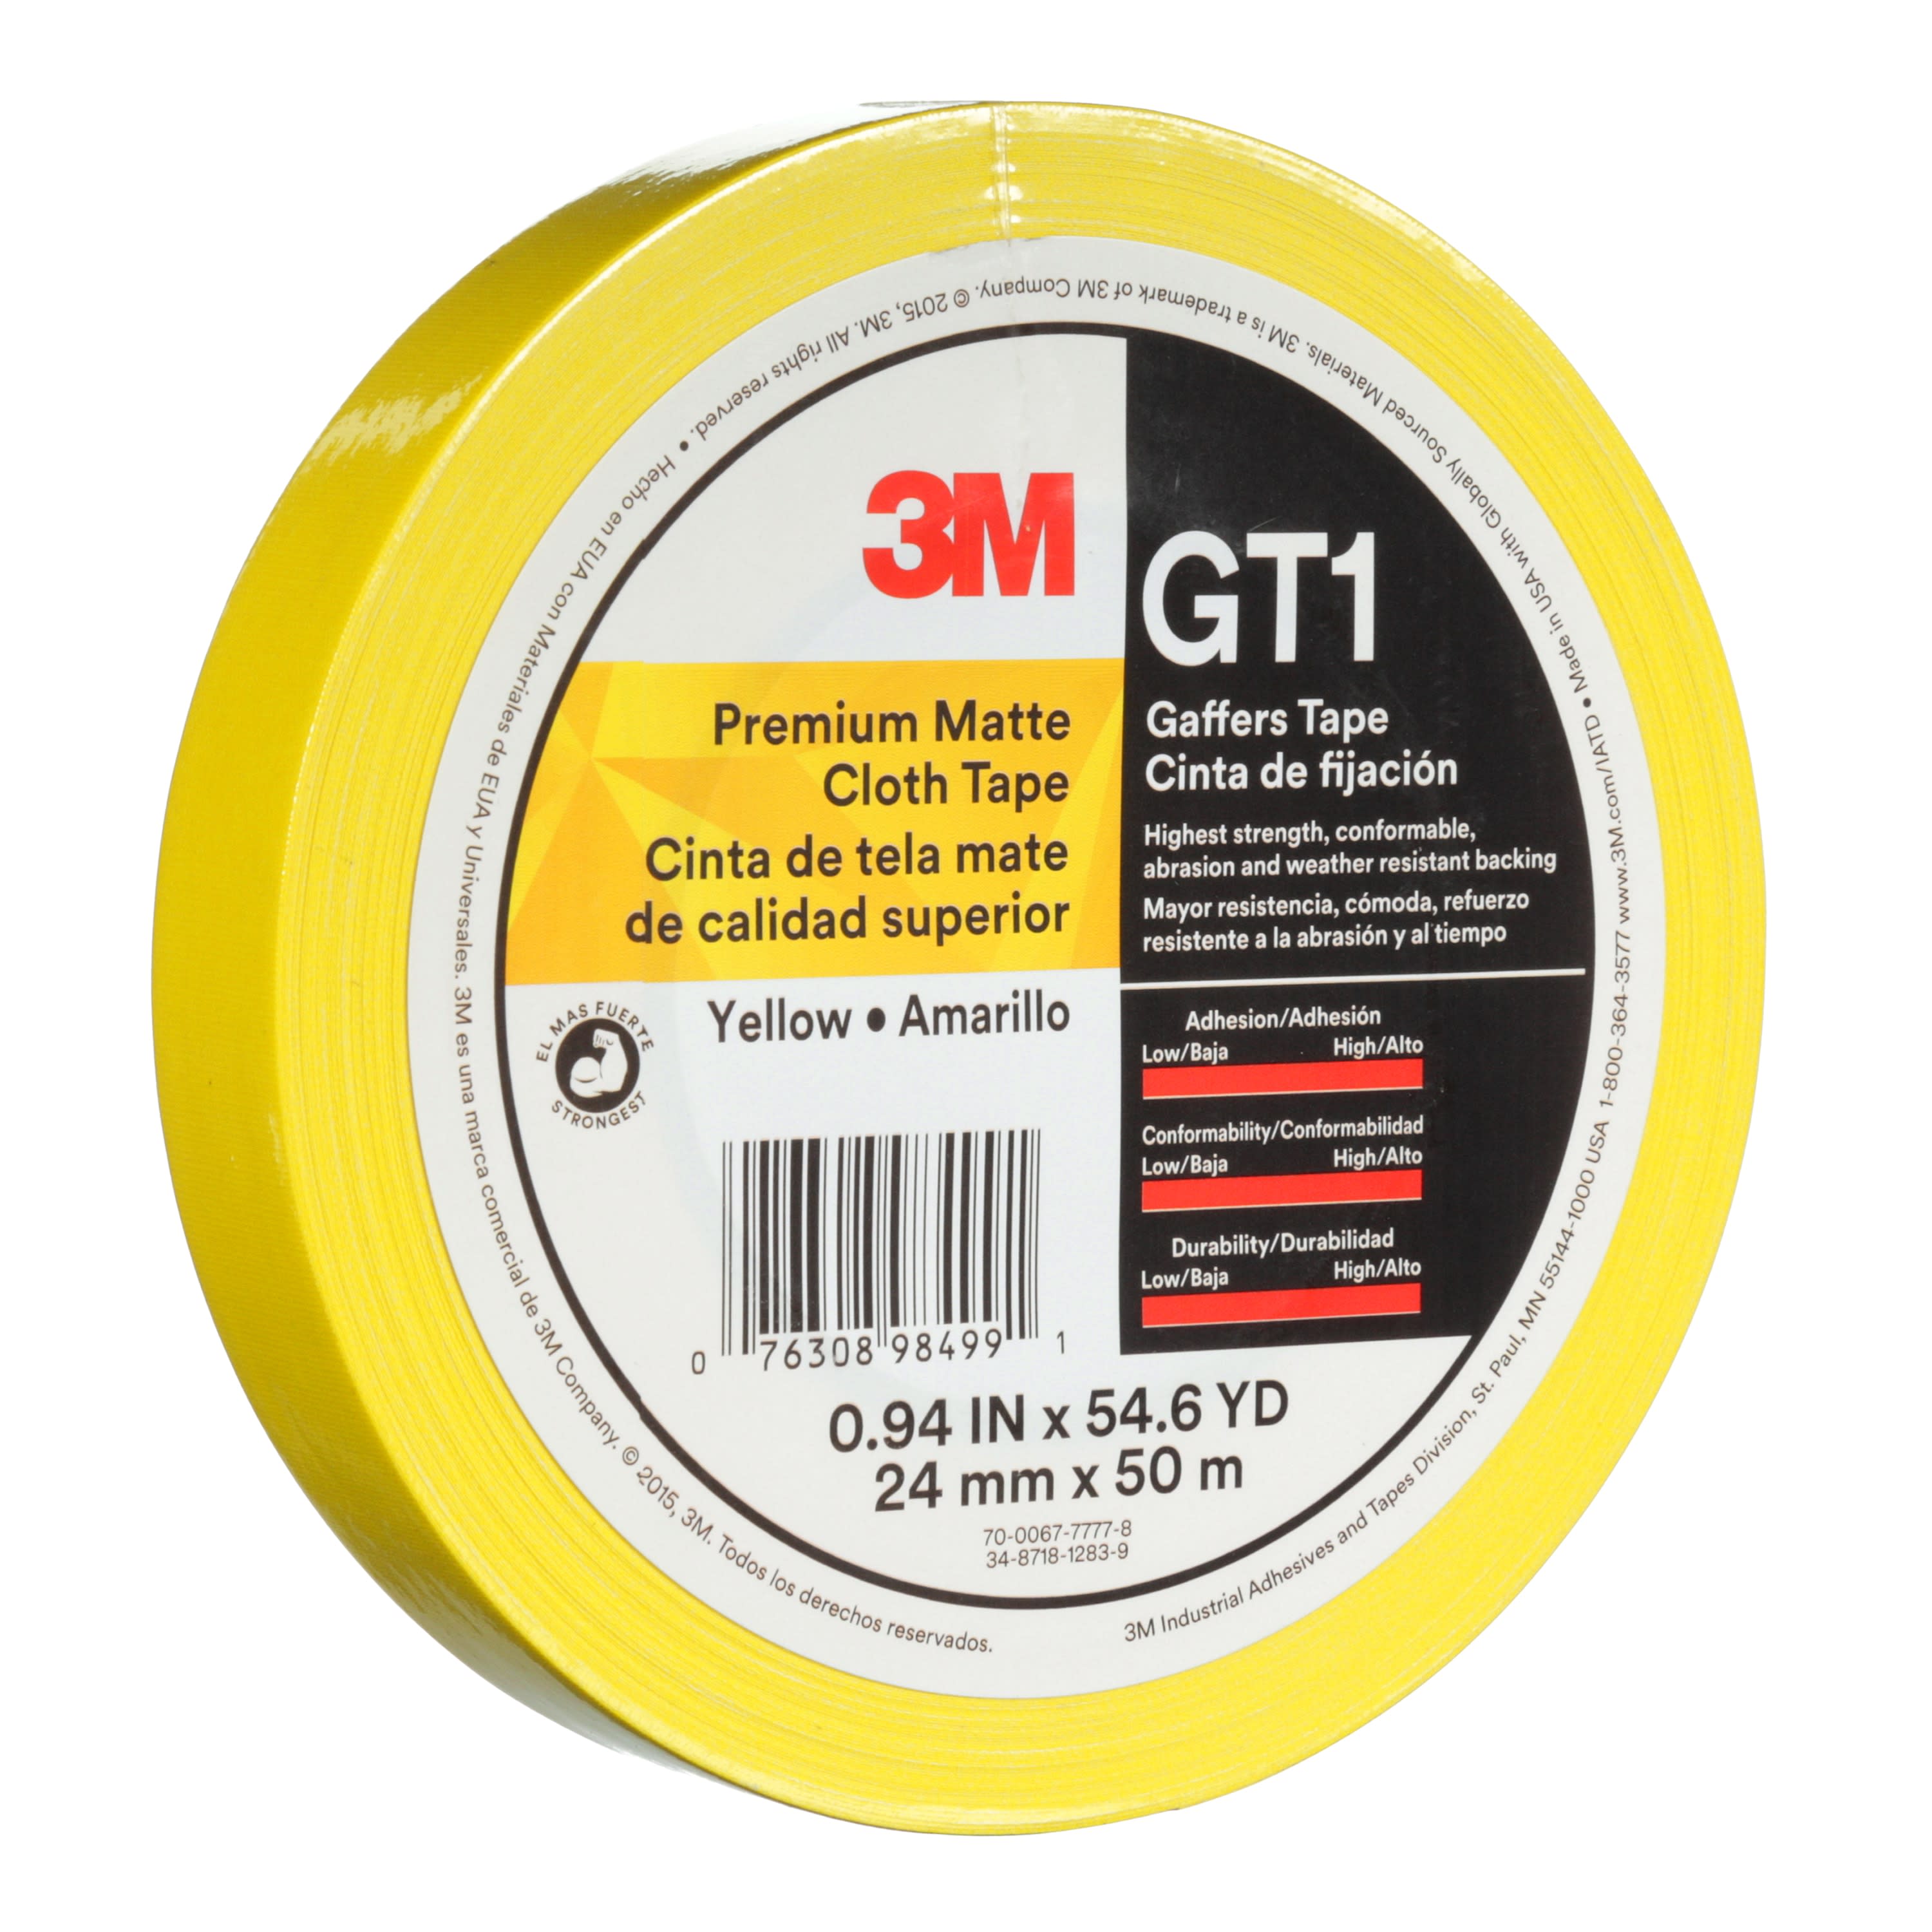 3M™ Premium Matte Cloth (Gaffers) Tape GT1, Yellow, 24 mm x 50 m, 11
mil, 48 per case